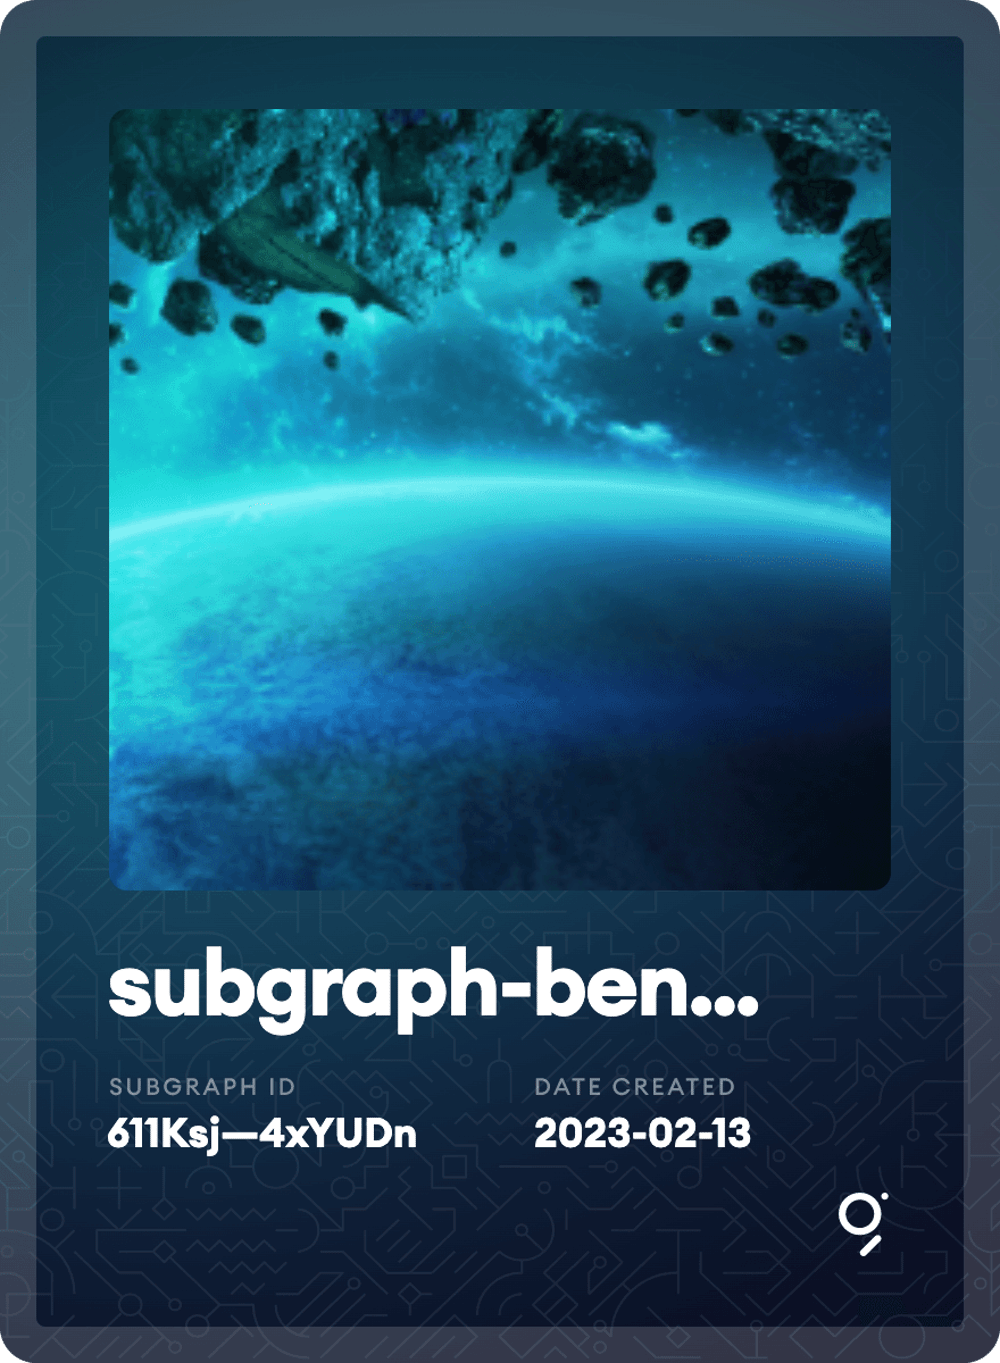 subgraph-benddao Subgraph